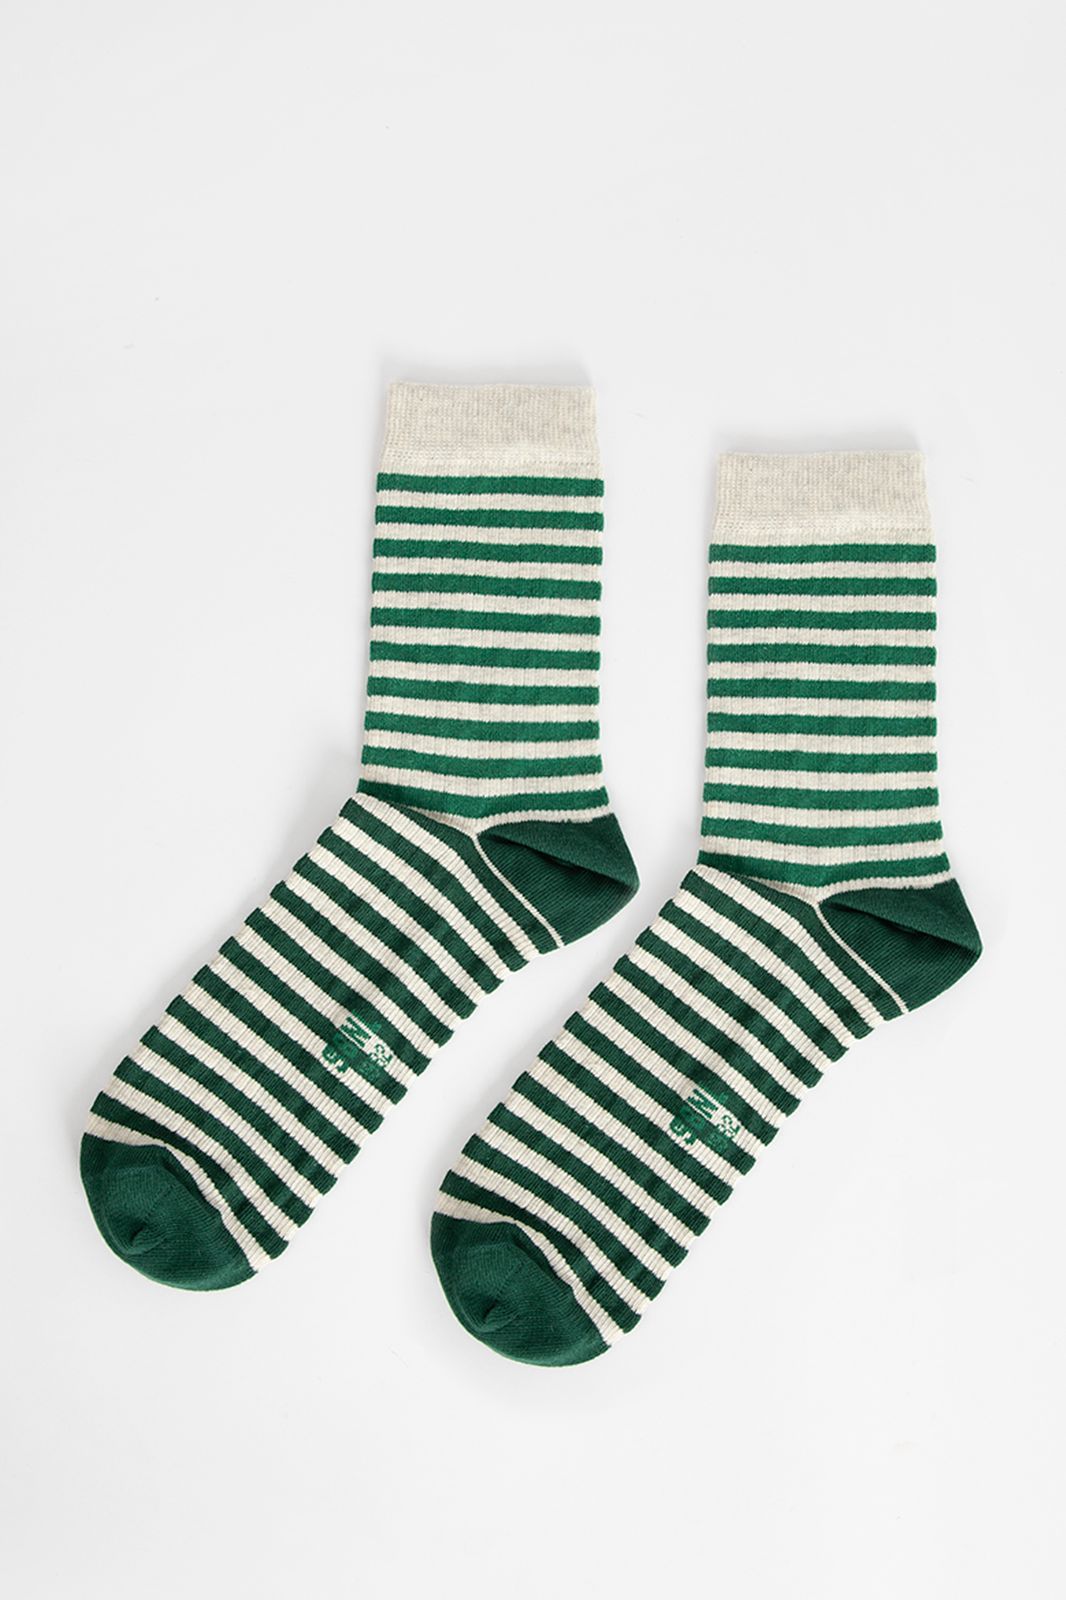 Gestreifte Socken mit Rippmuster - dunkelgrün